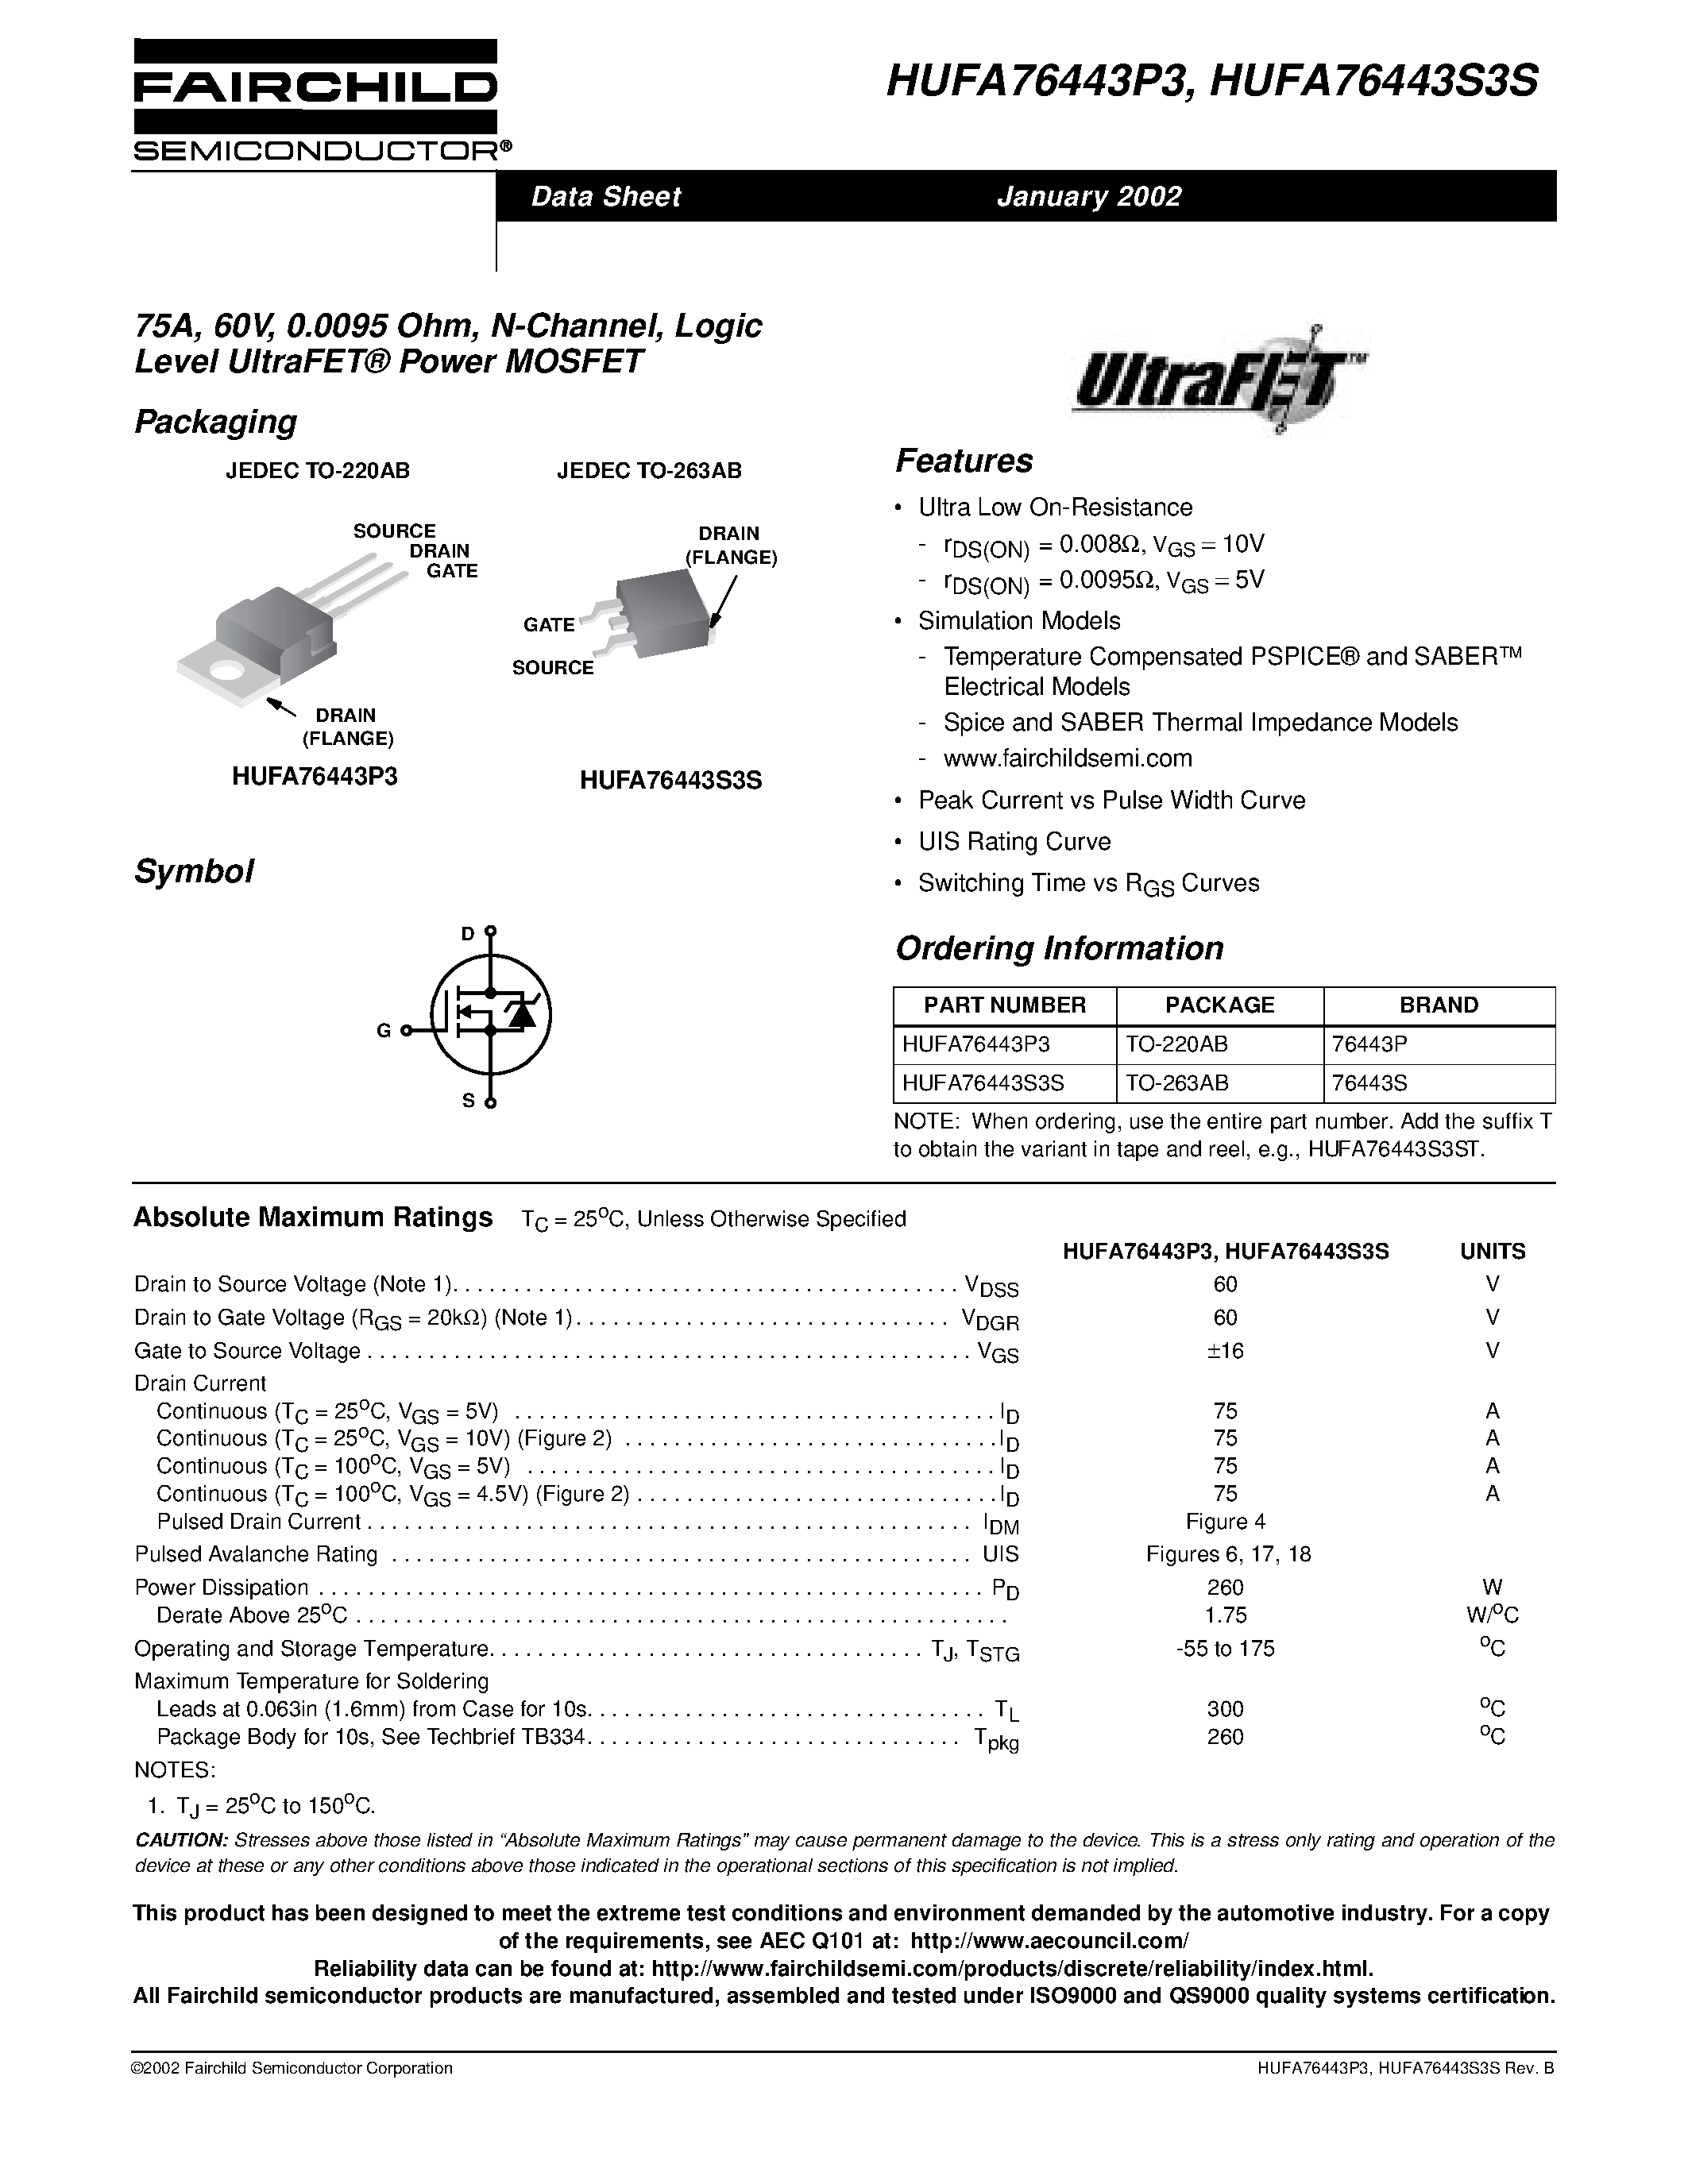 Даташит HUFA76443S3S - 75A/ 60V/ 0.0095 Ohm/ N-Channel/ Logic Level UltraFET Power MOSFET страница 1